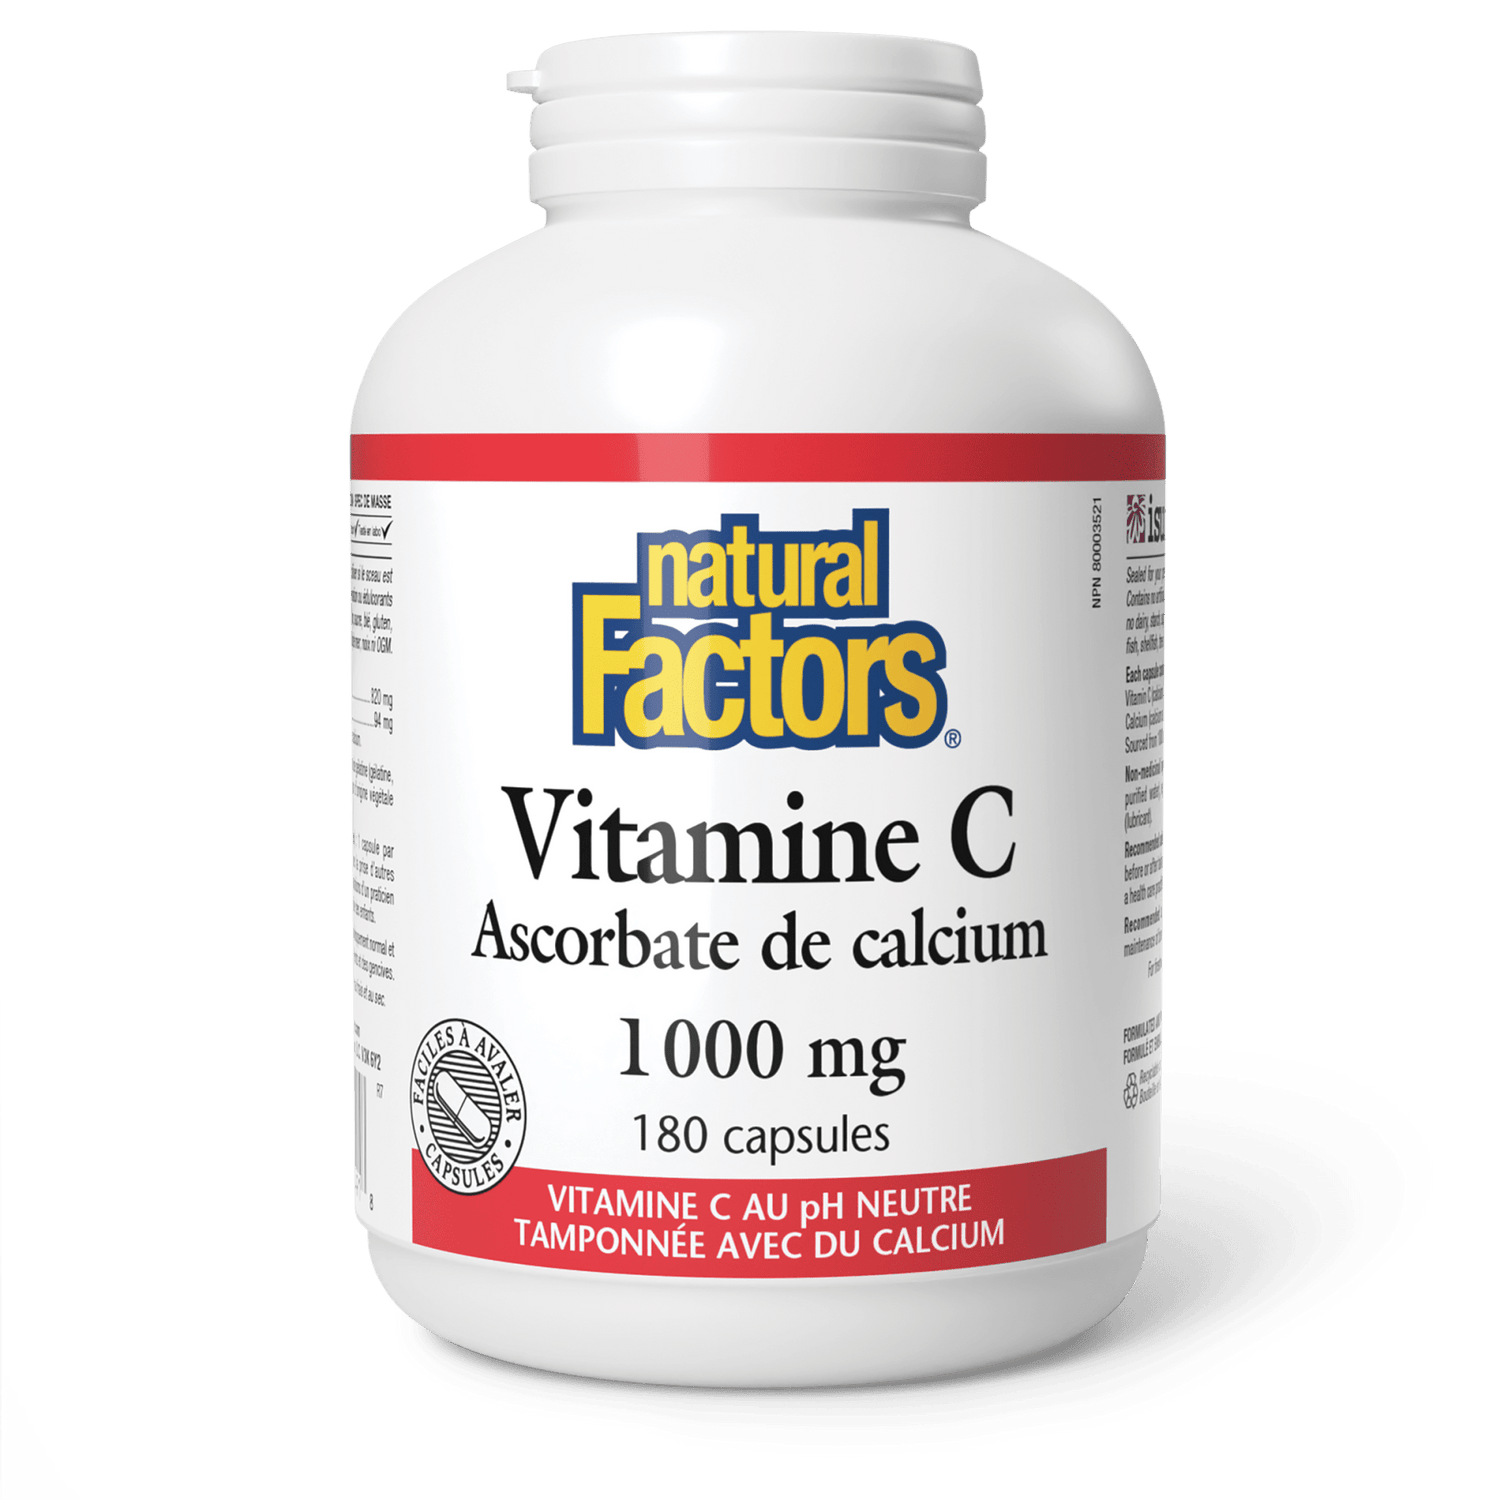 Vitamine C Ascorbate de calcium 1 000 mg, Natural Factors|v|image|13491